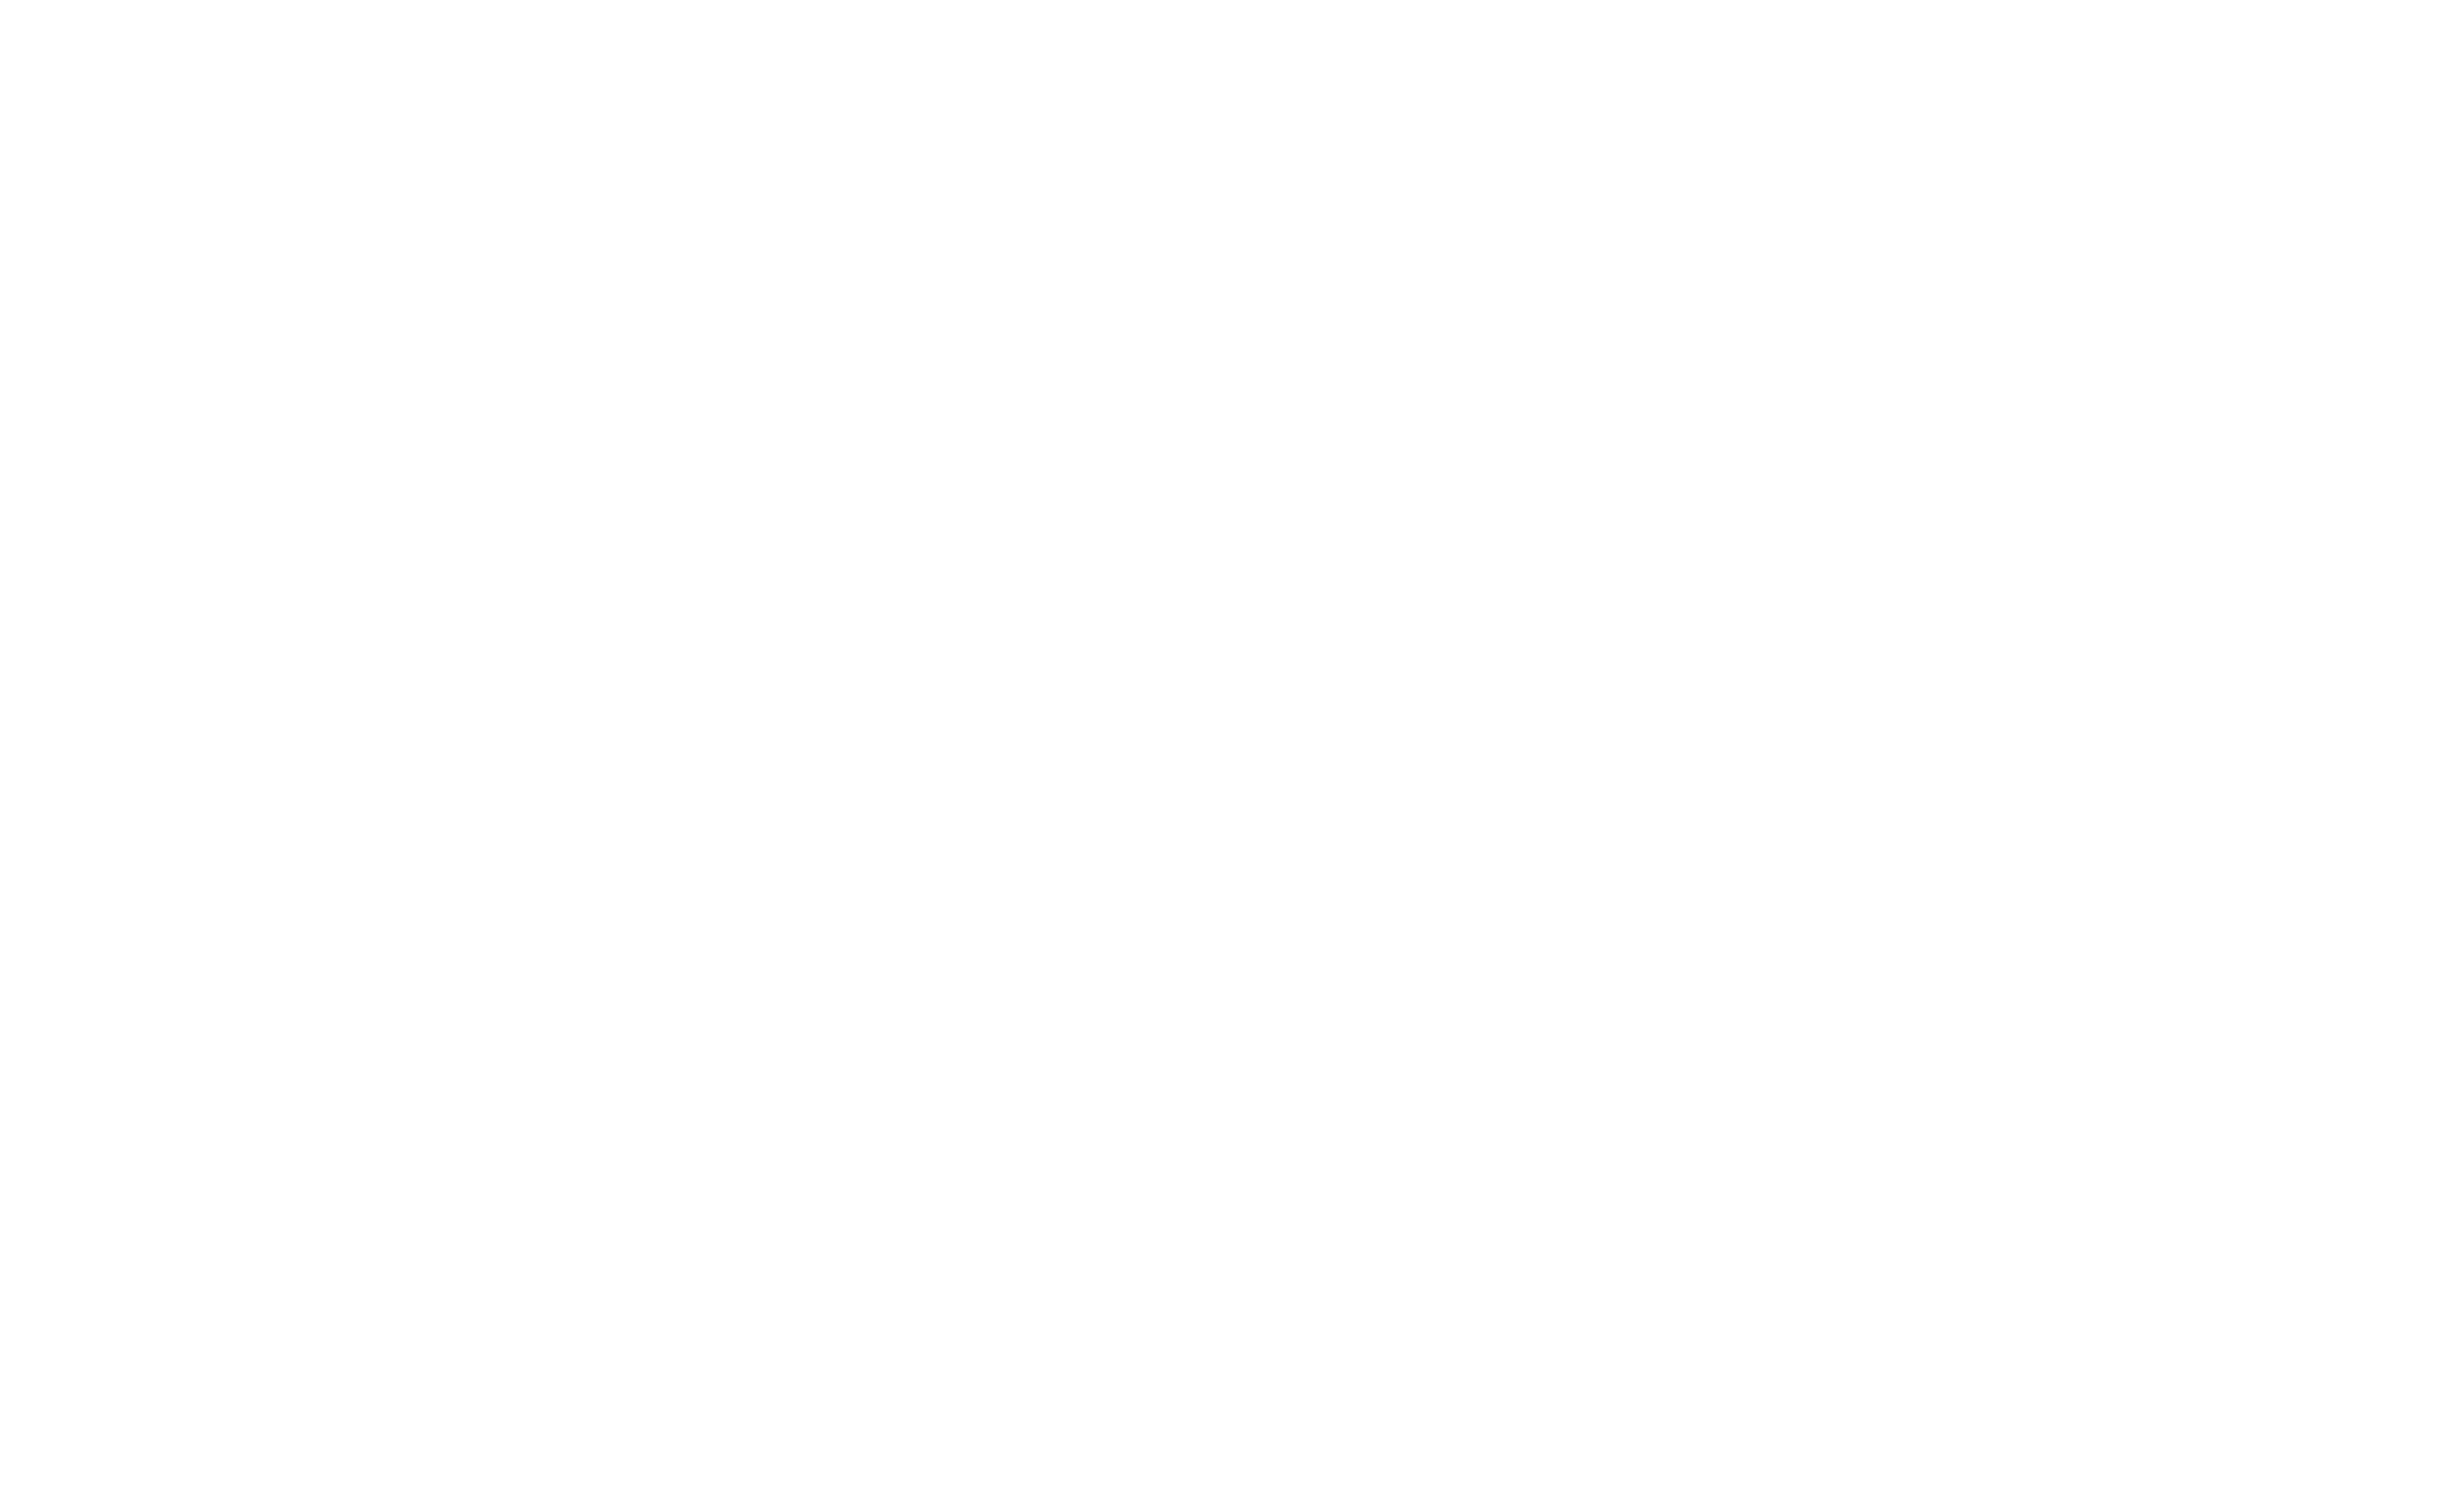 Infillion Logo